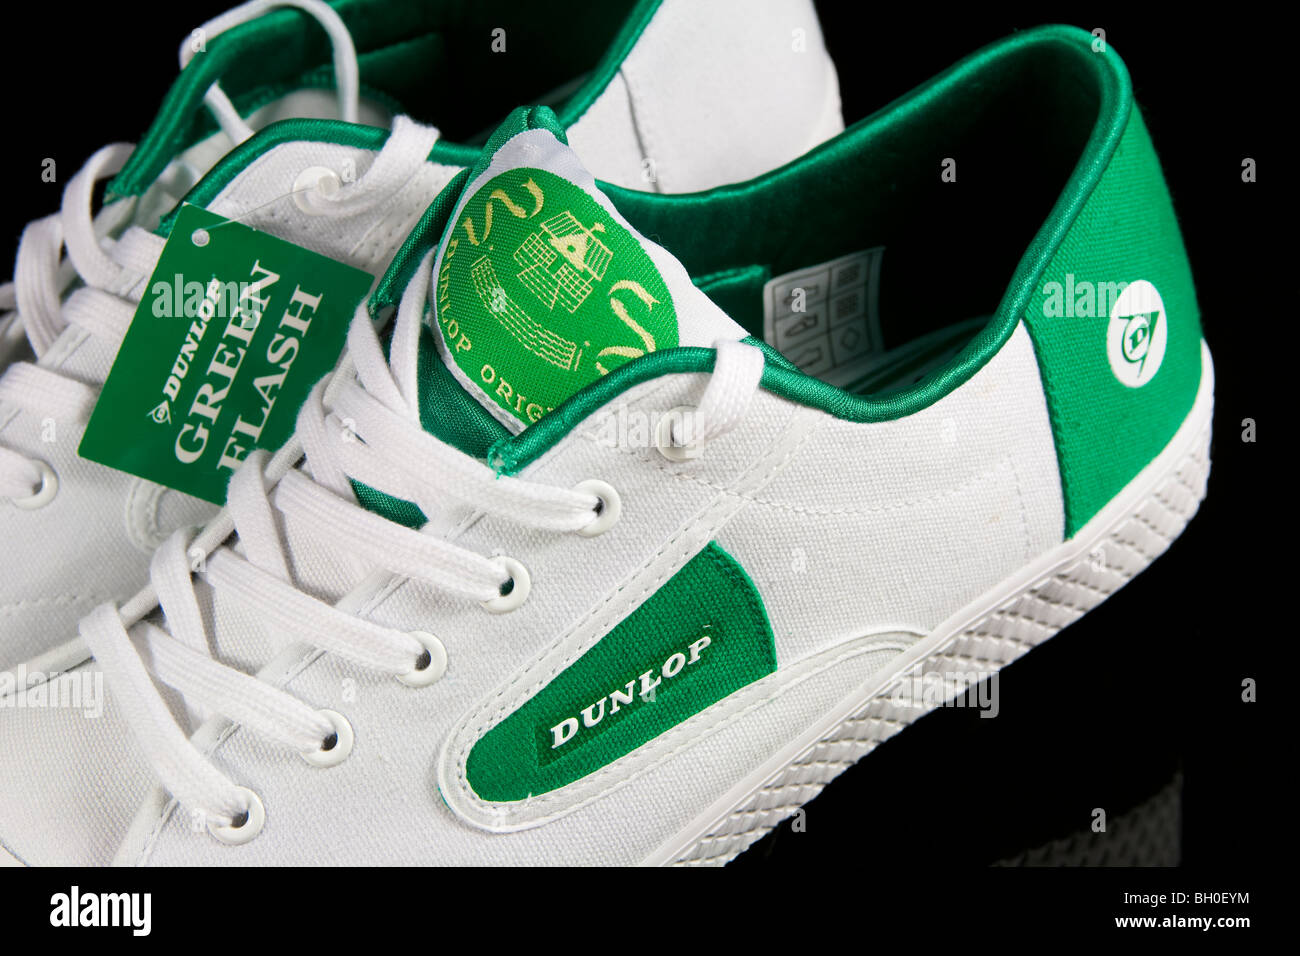 Dunlop Green Flash tennis shoes Stock 